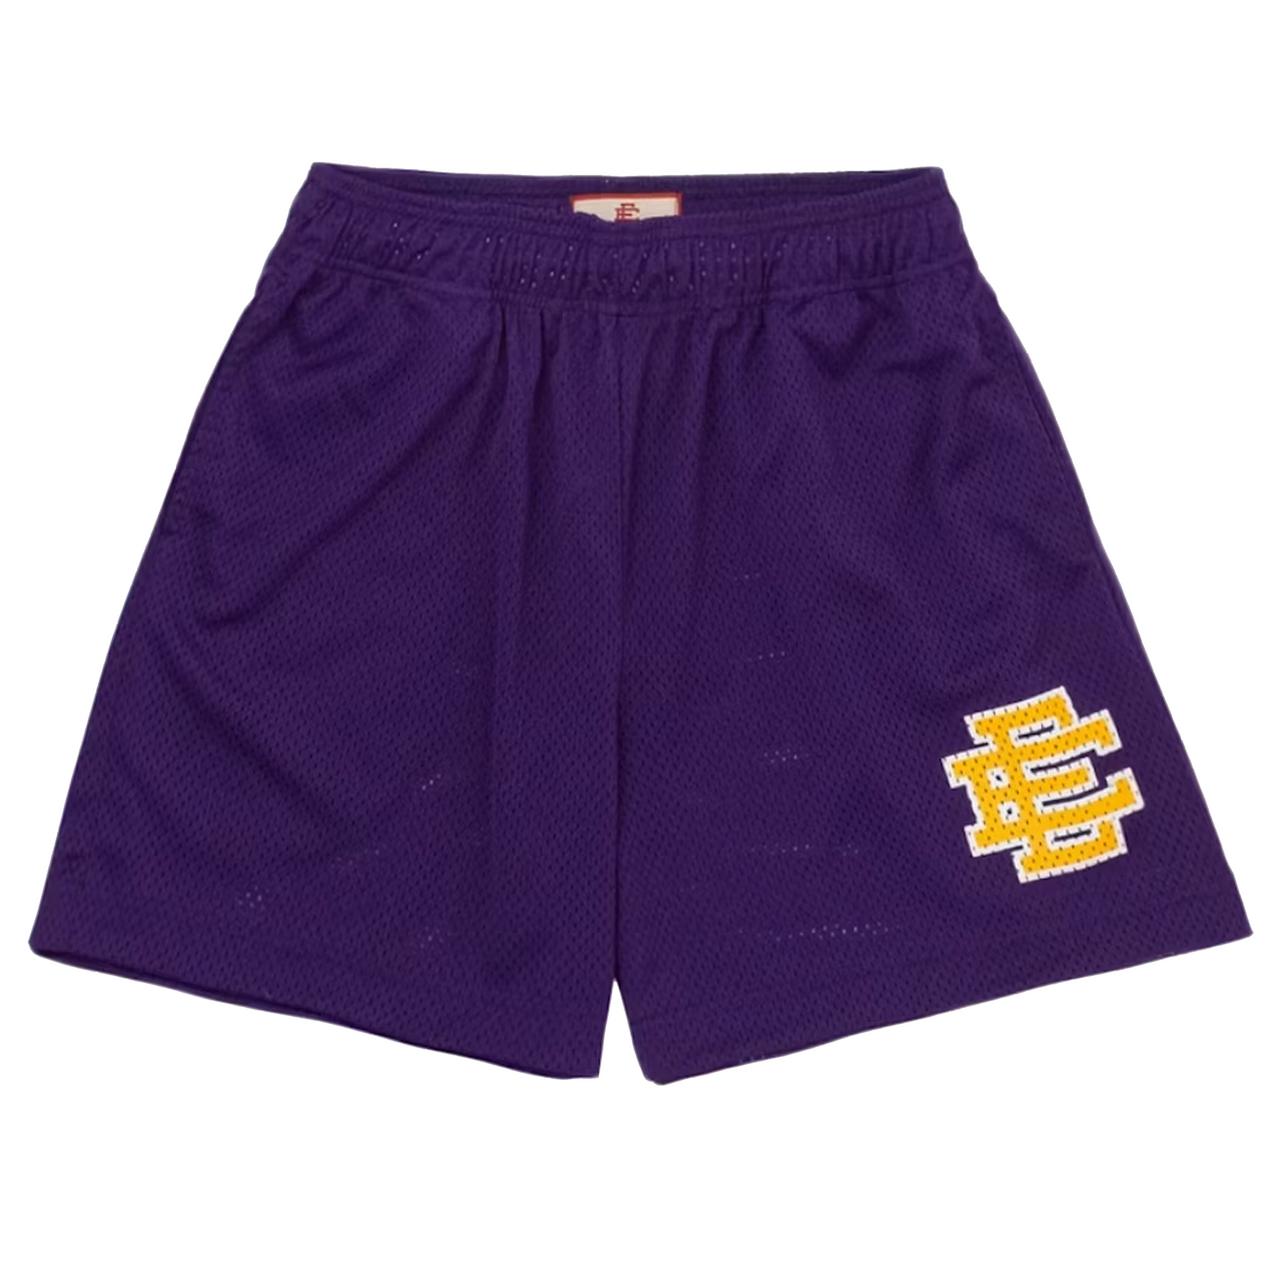 Eric Emanuel Basic Shorts Purple Yellow